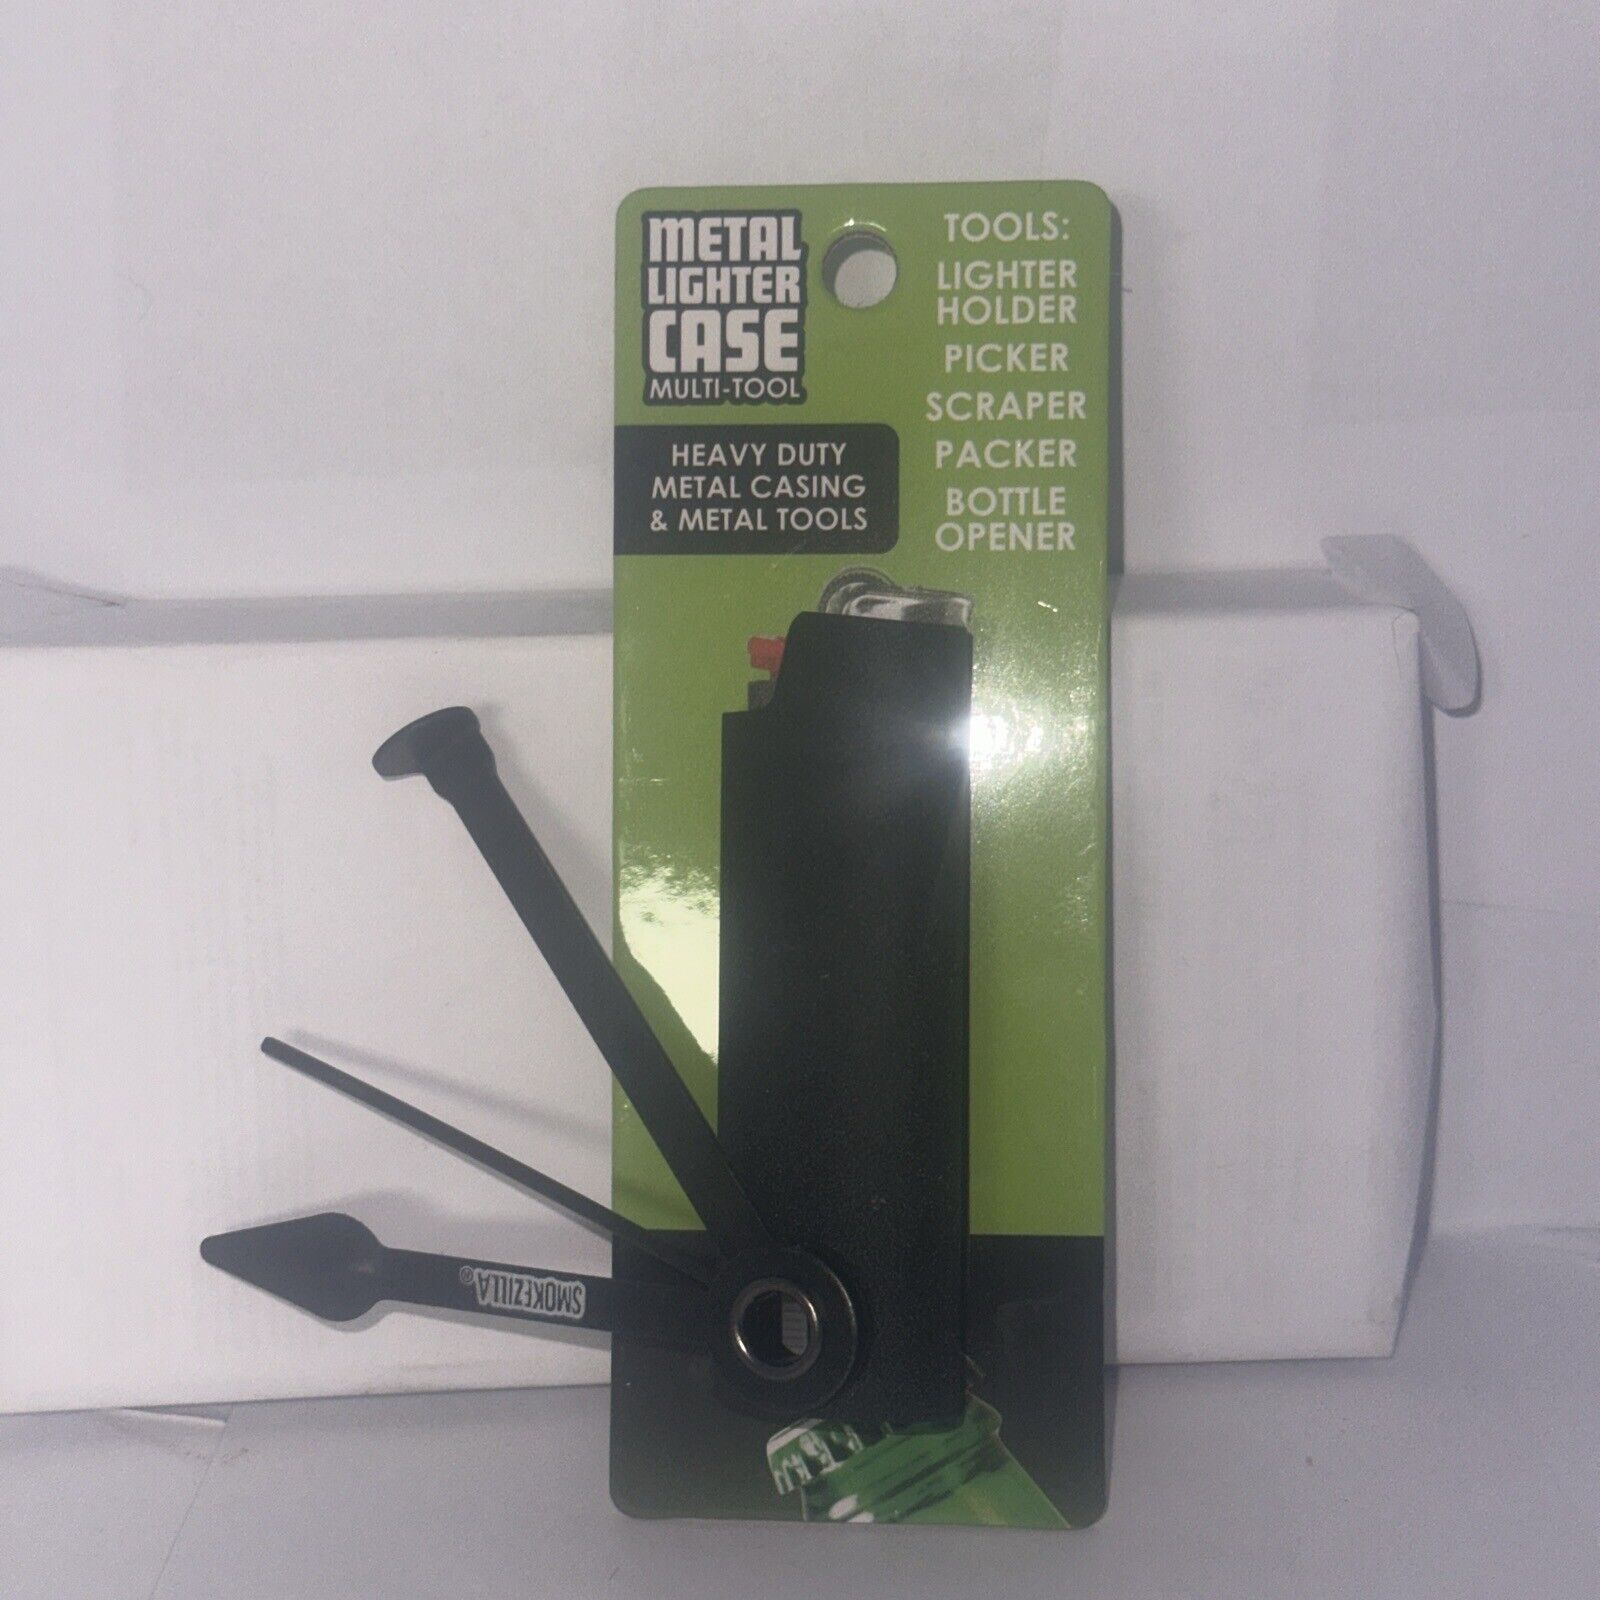 Smokezilla 5-in-1 Lighter Case Holder All Inclusive Smokers Multi Tool